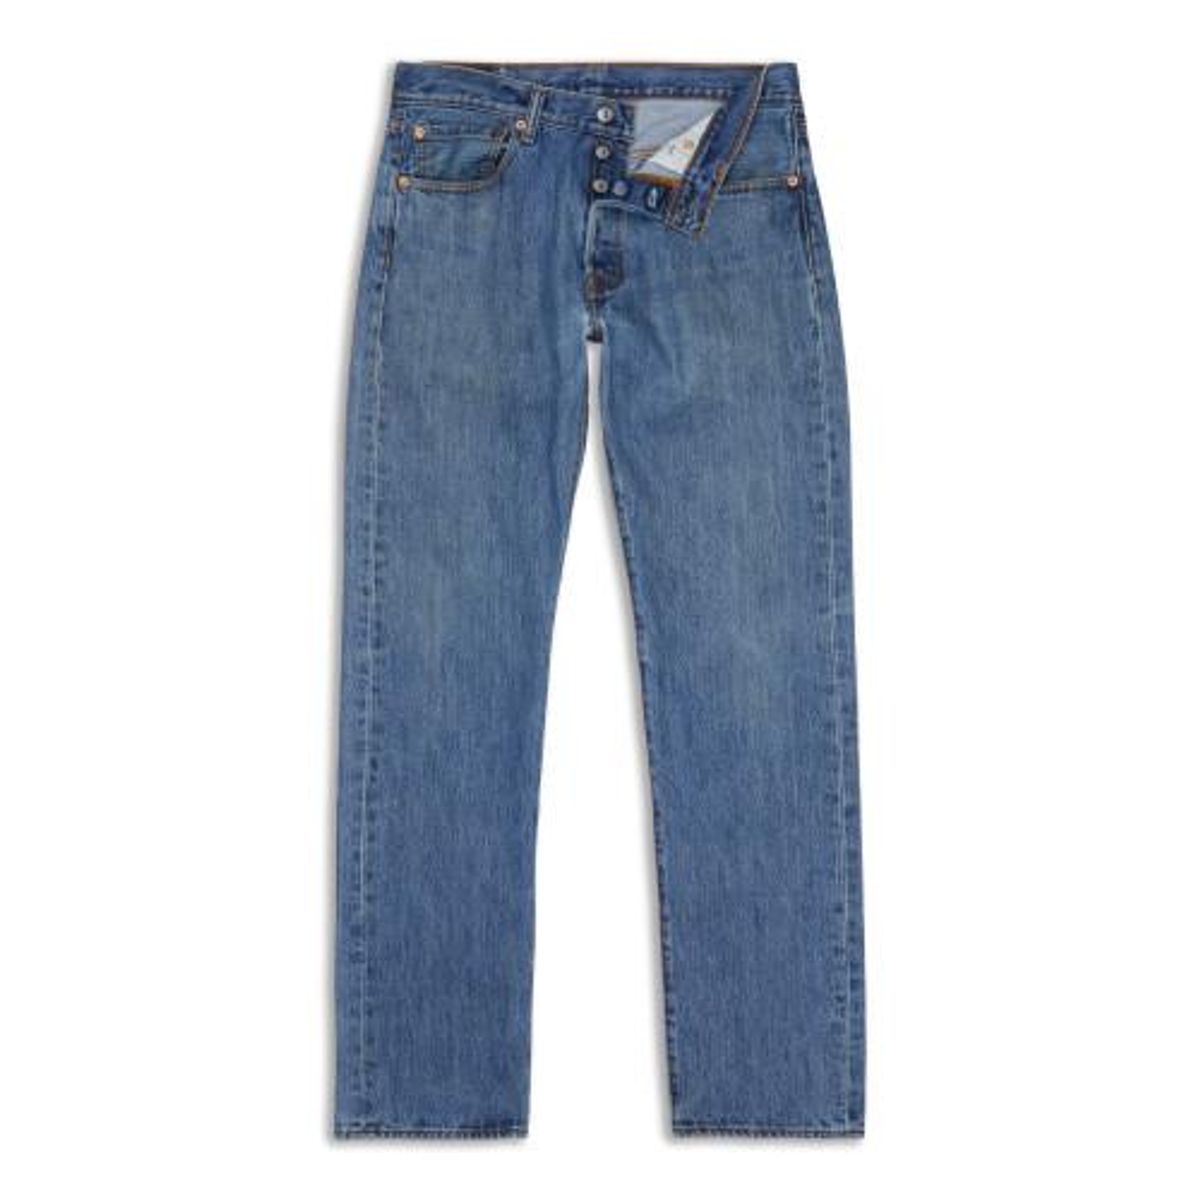 Men’s Vintage 501 Jeans